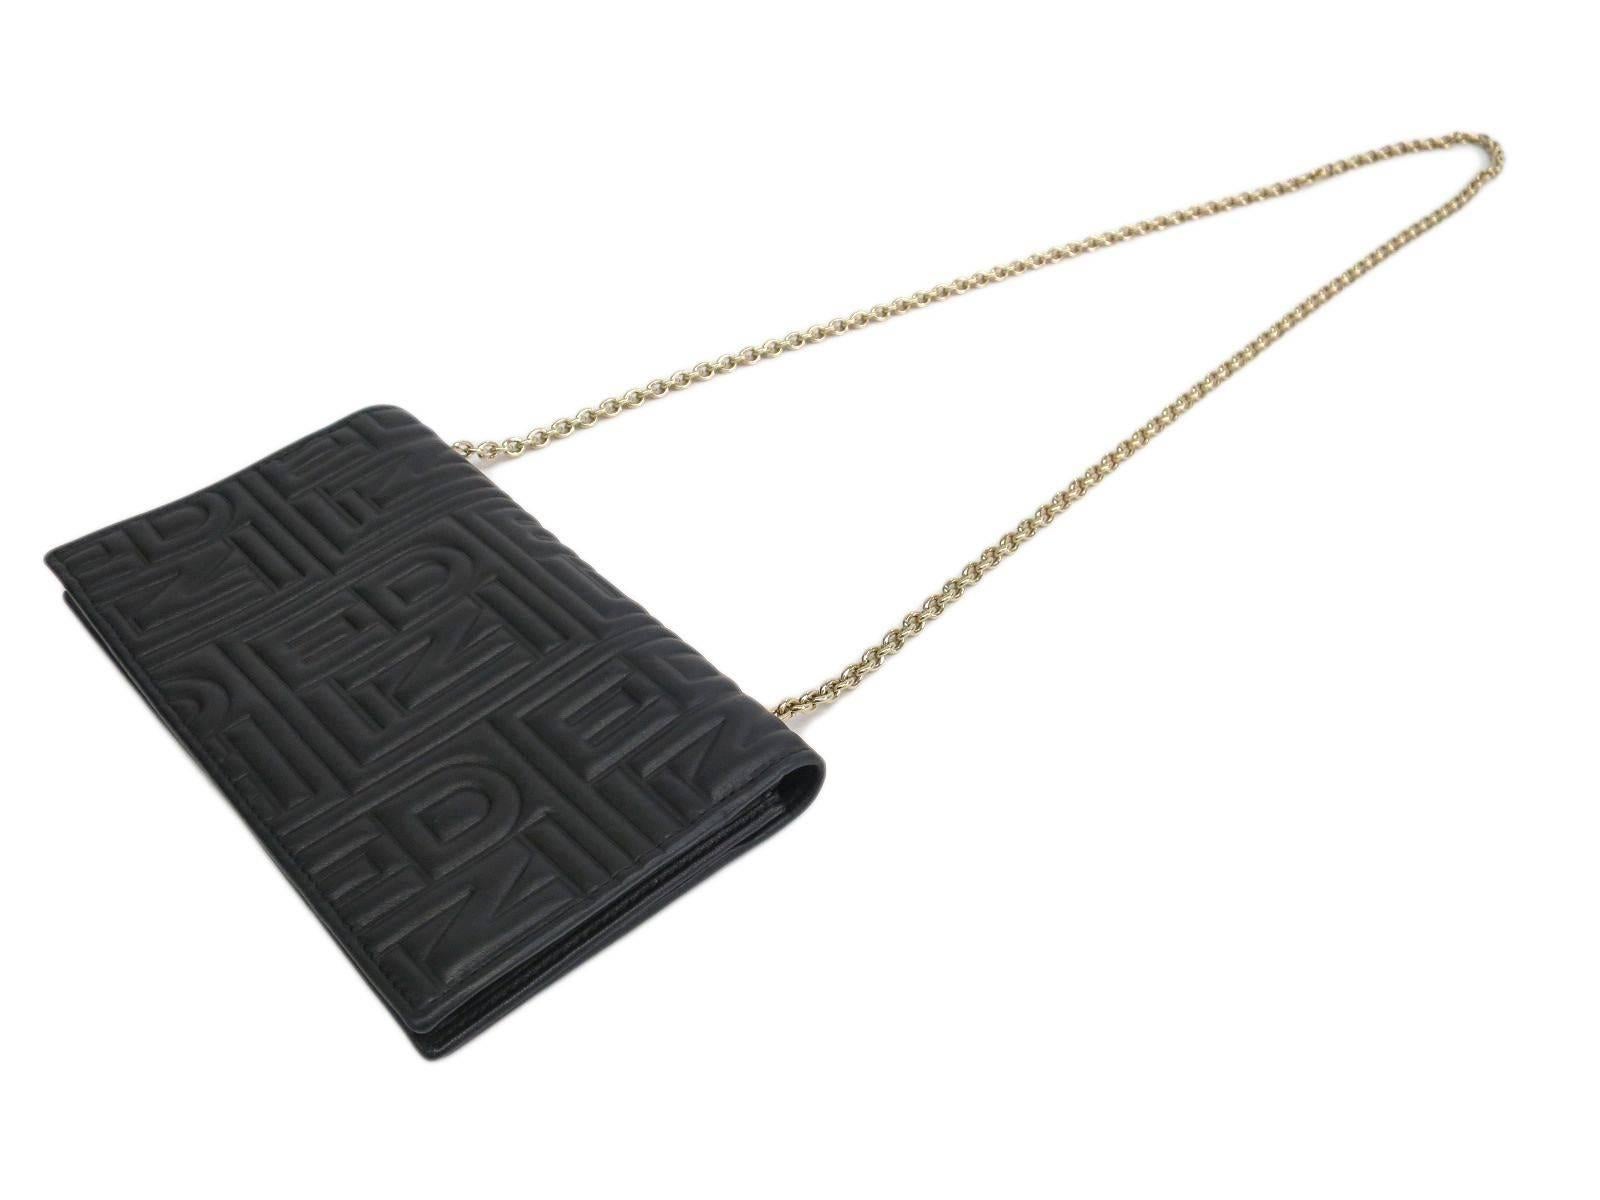 fendi black bag with gold chain